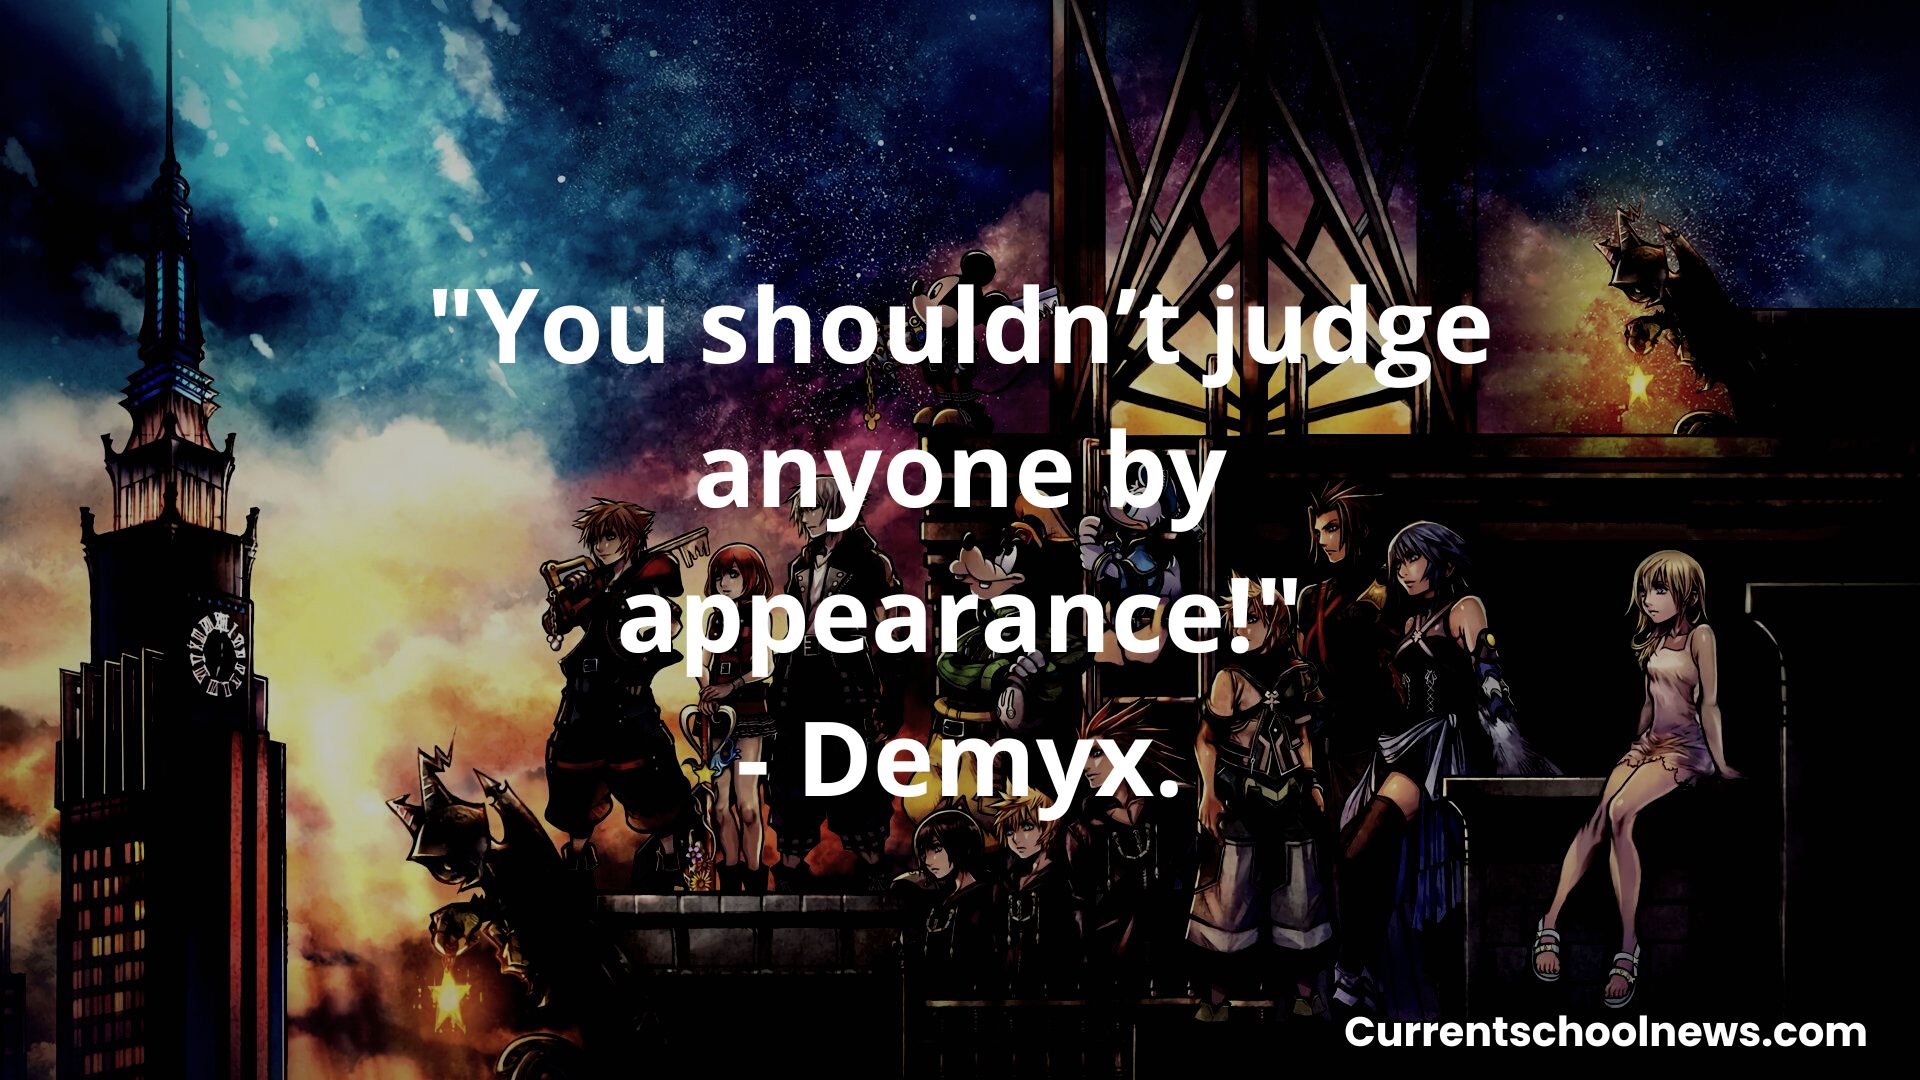 Kingdom Hearts Quotes